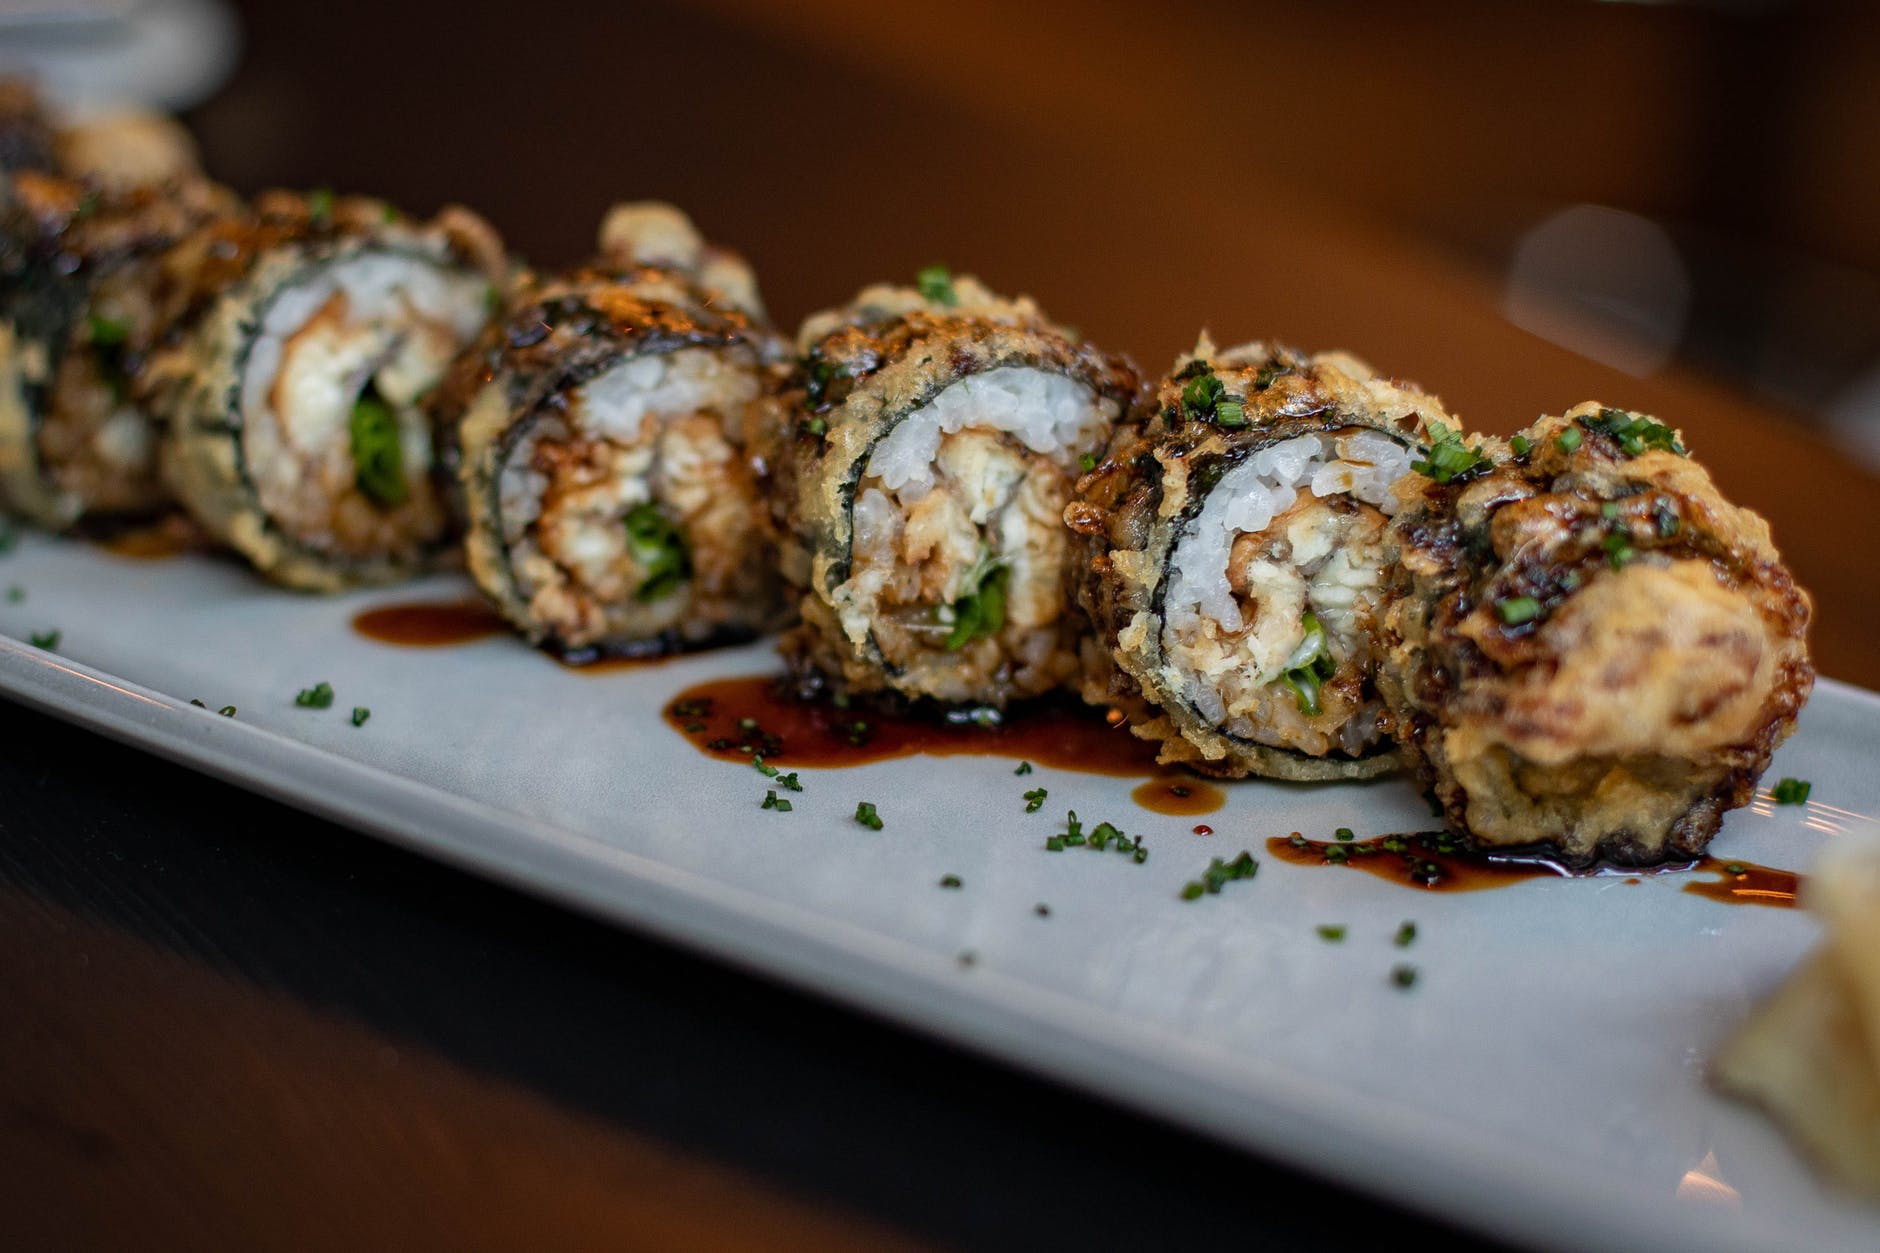 Hot Philadelphia: Prepare essa receita japonesa deliciosa.